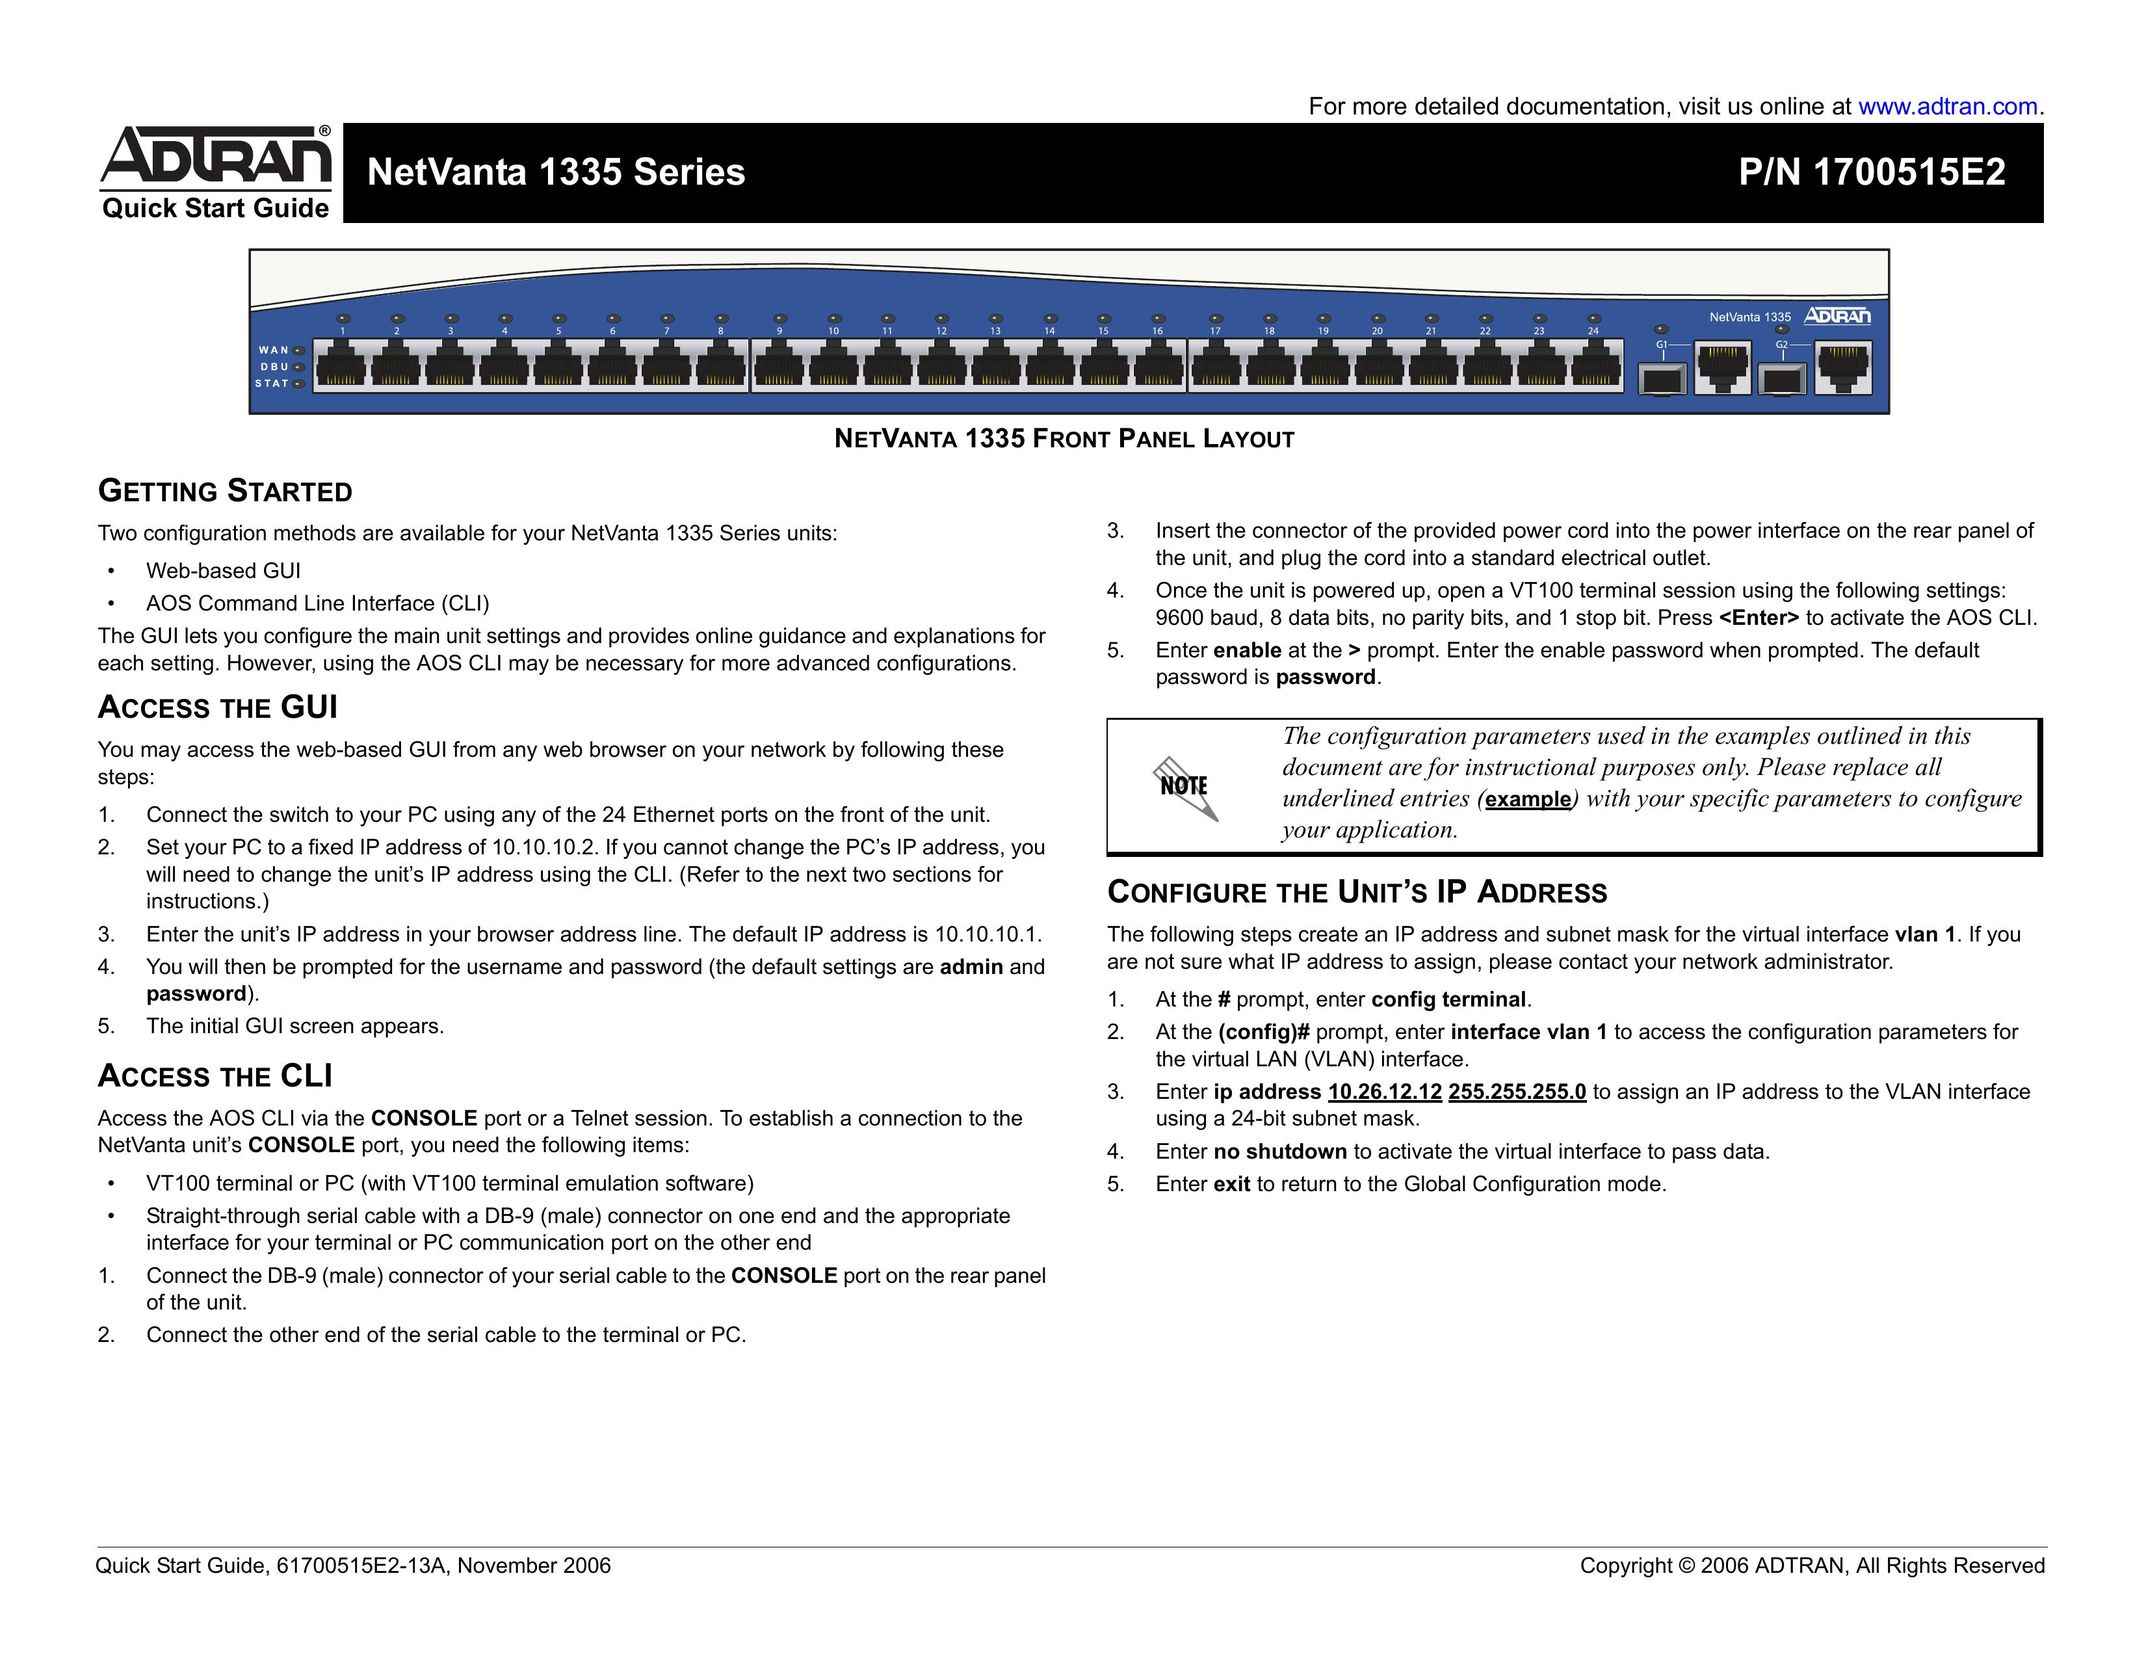 ADTRAN 1335 Series Network Router User Manual